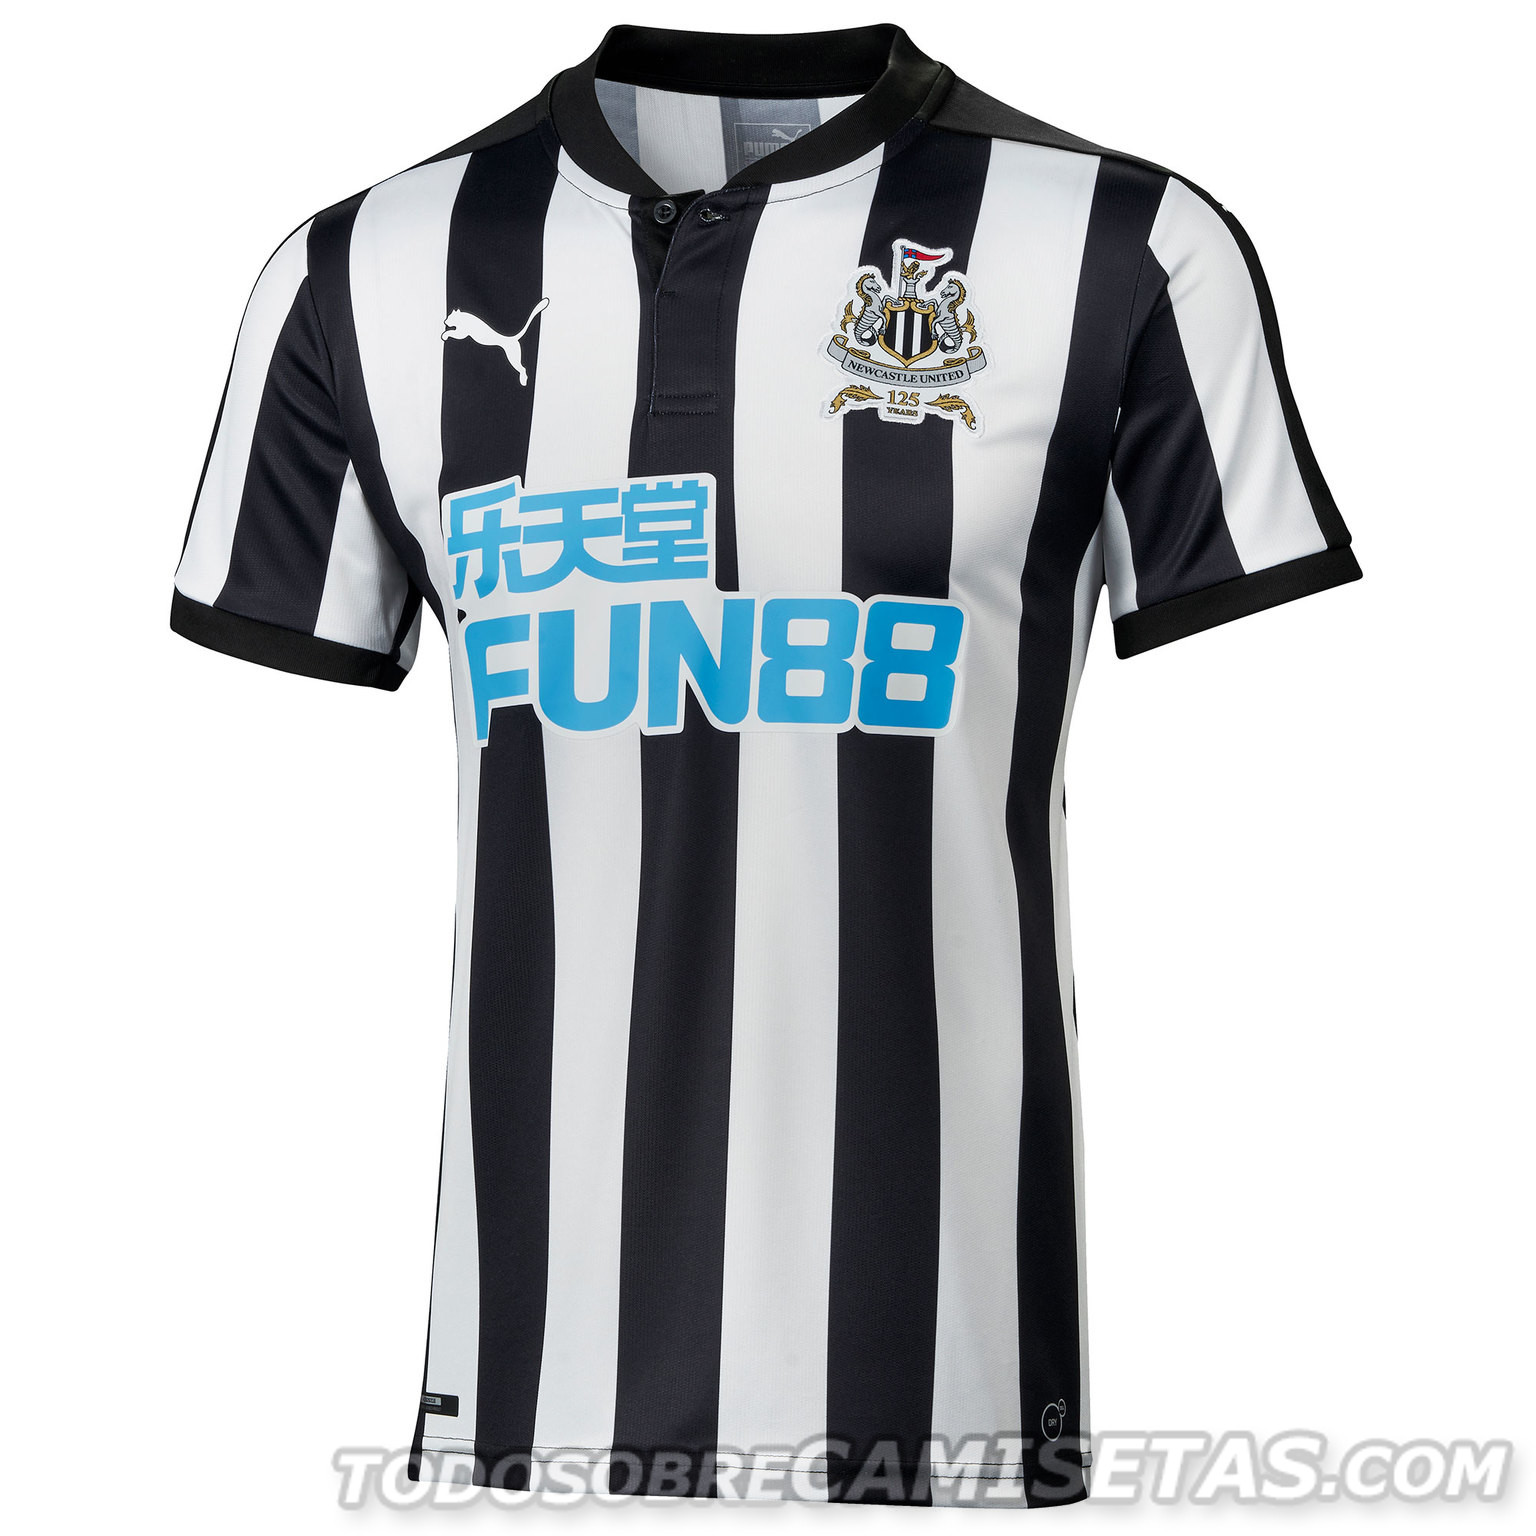 Newcastle United 2017-18 PUMA home kit